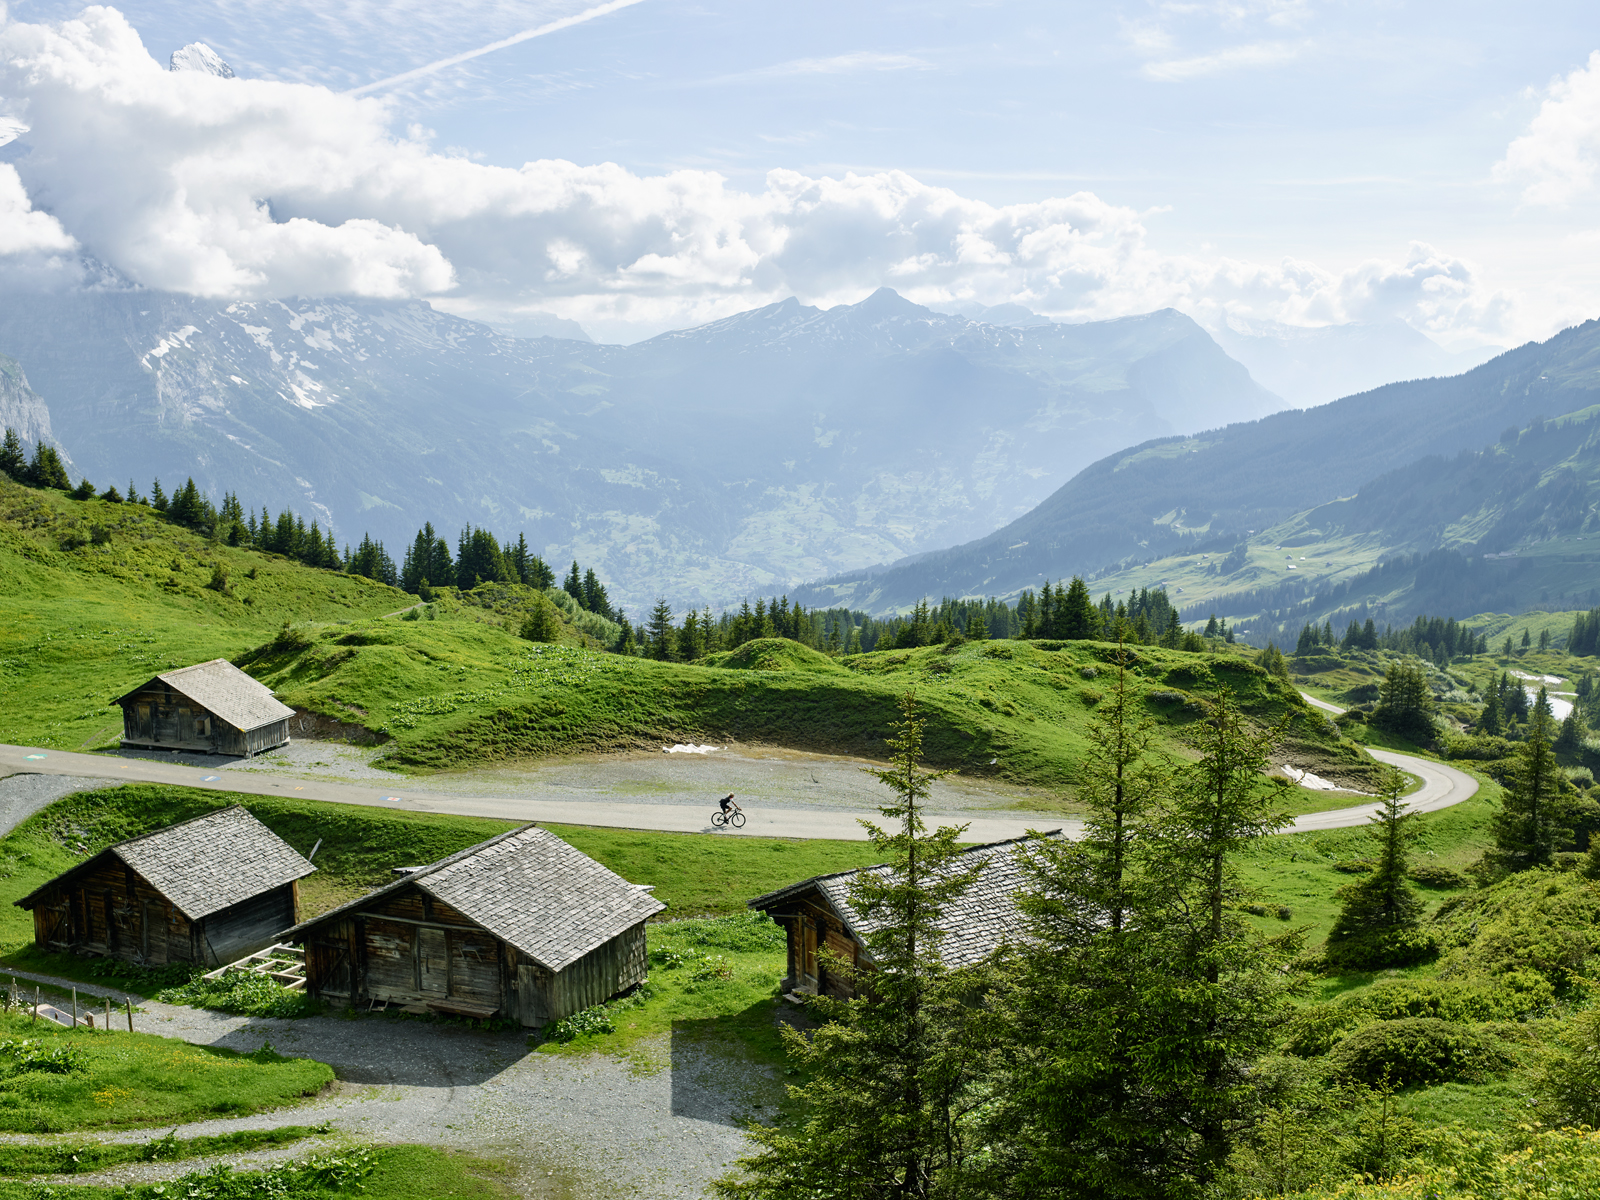 Grosse Scheidegg, Berneses Alps Switzerland, Swiss Alps, near Meiringen and Grindelwald, Eiger, Mountain pass, cycling, landscape photography